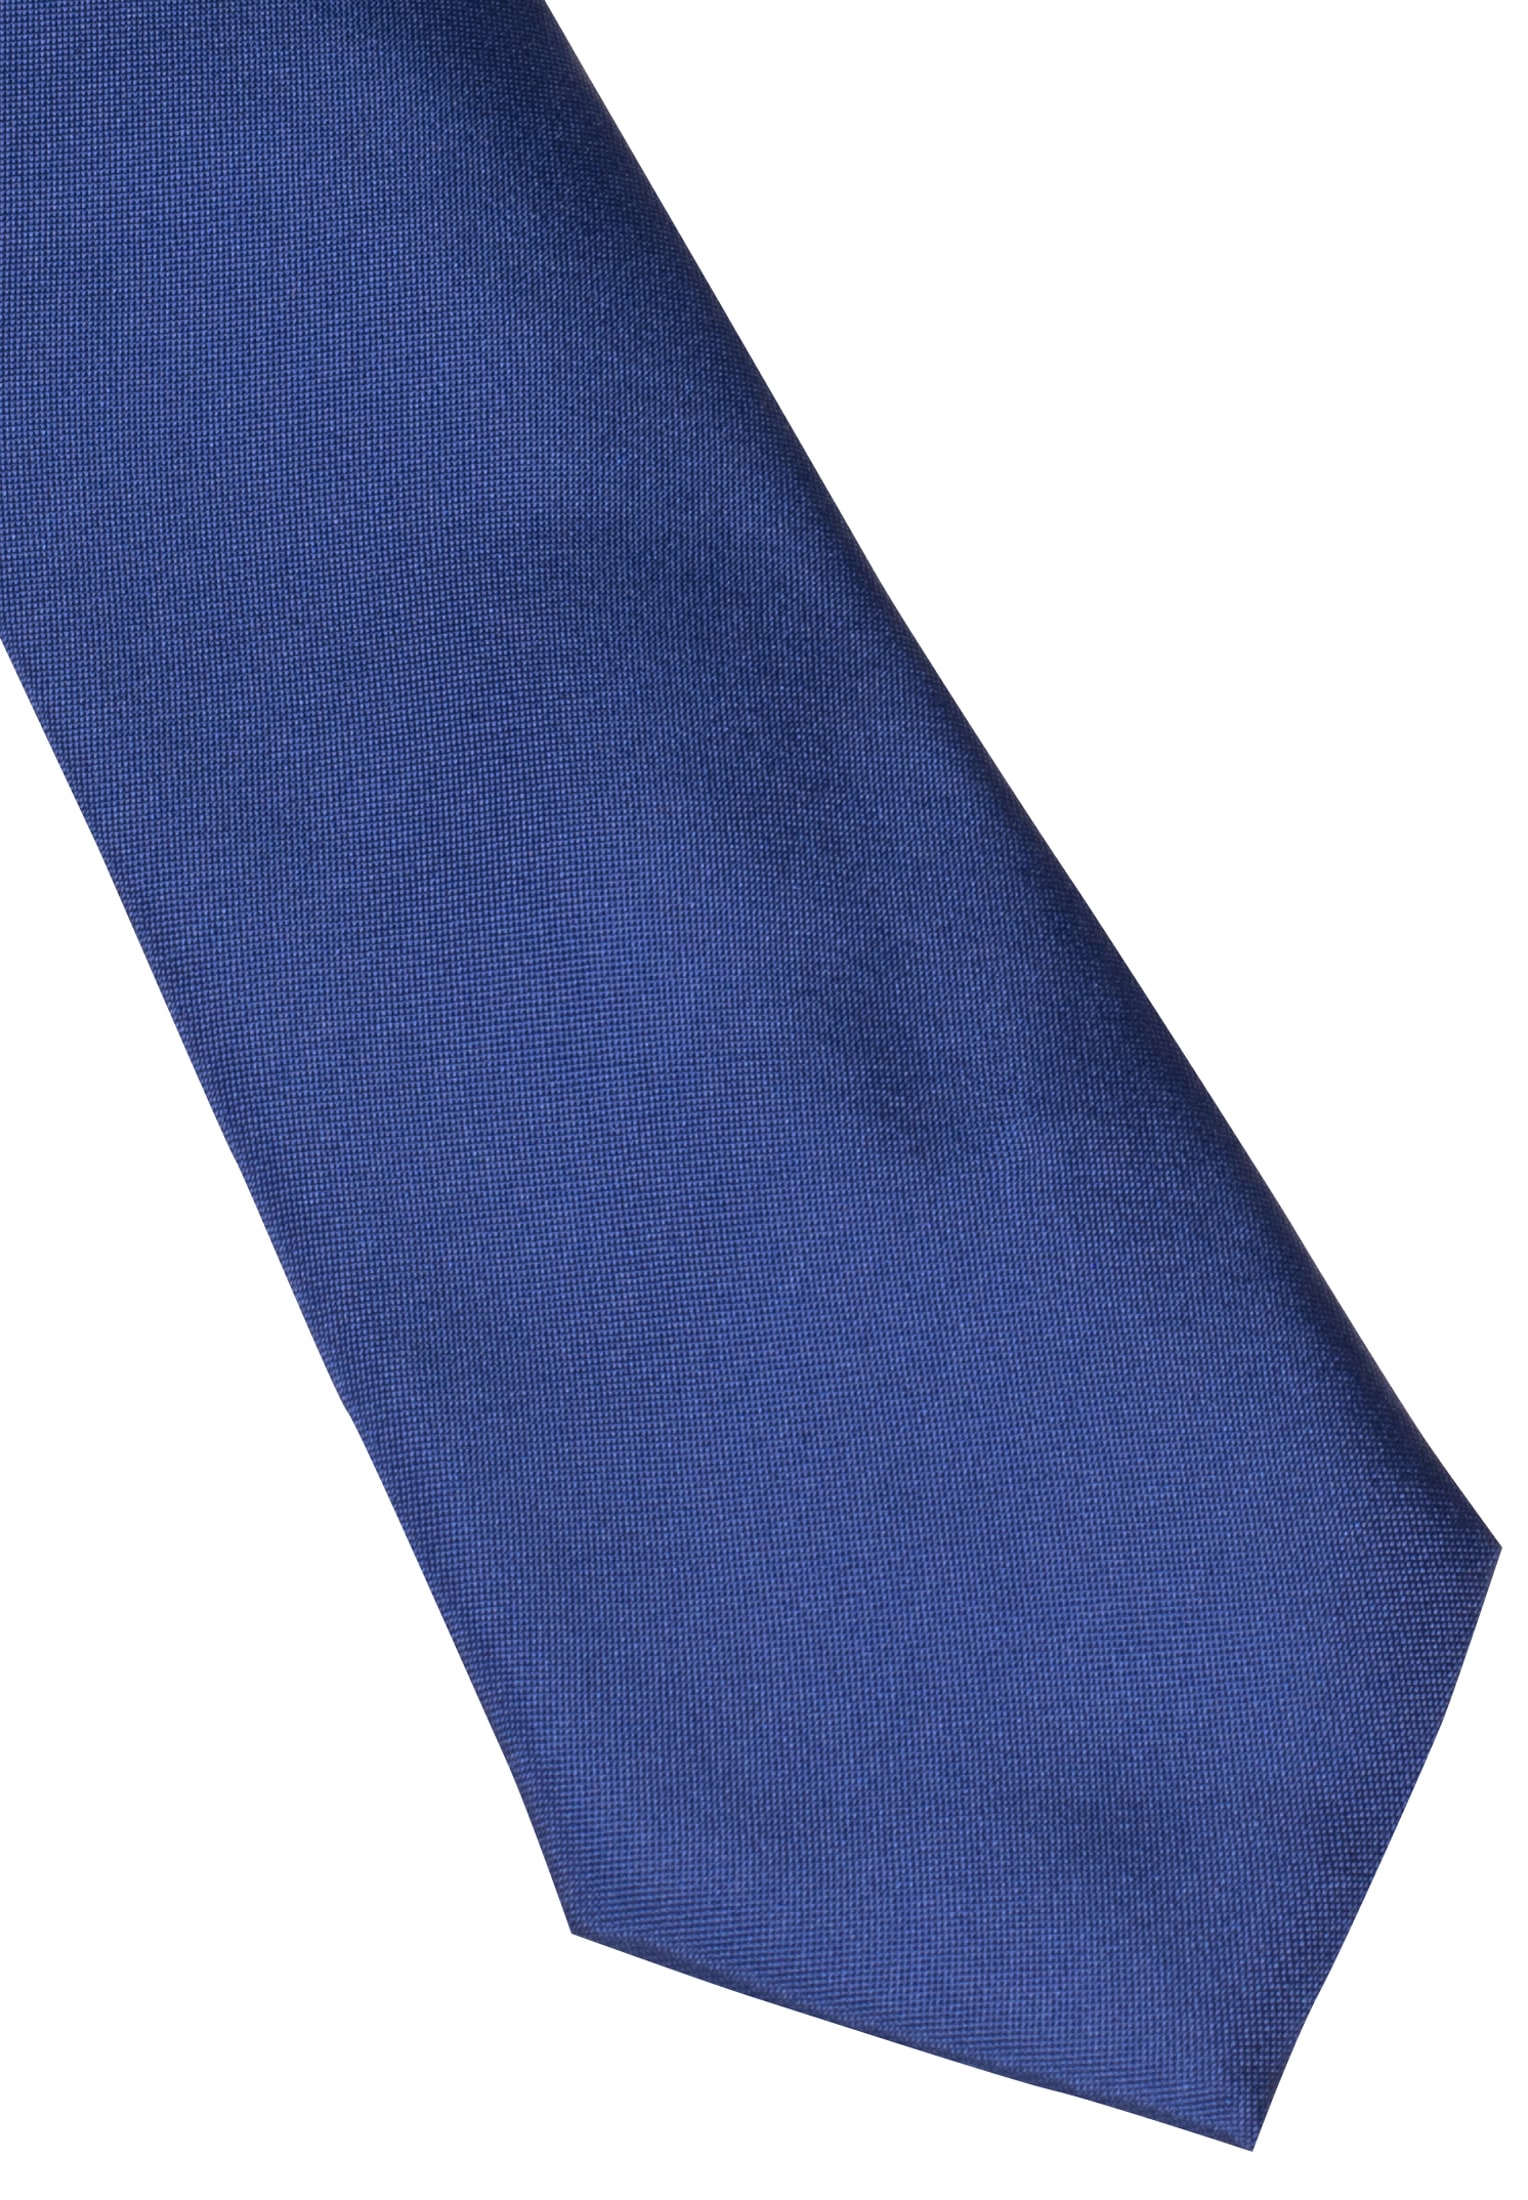 Krawatte in indigo | | indigo 1AC00025-01-92-142 | unifarben 142